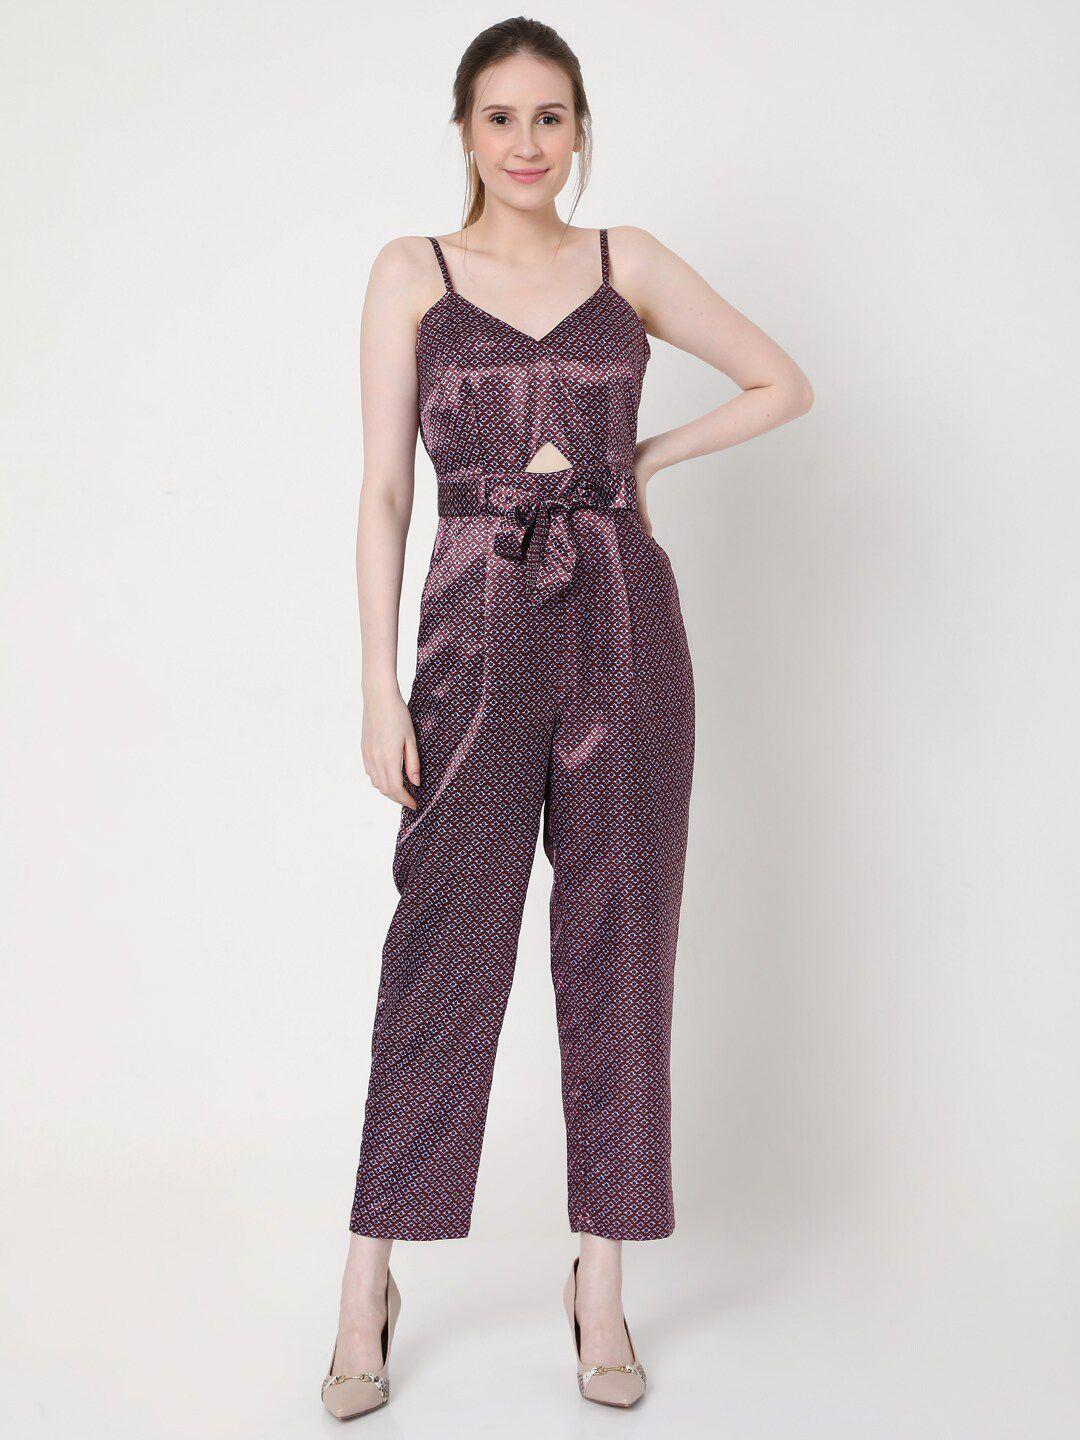 vero moda purple & white printed basic jumpsuit